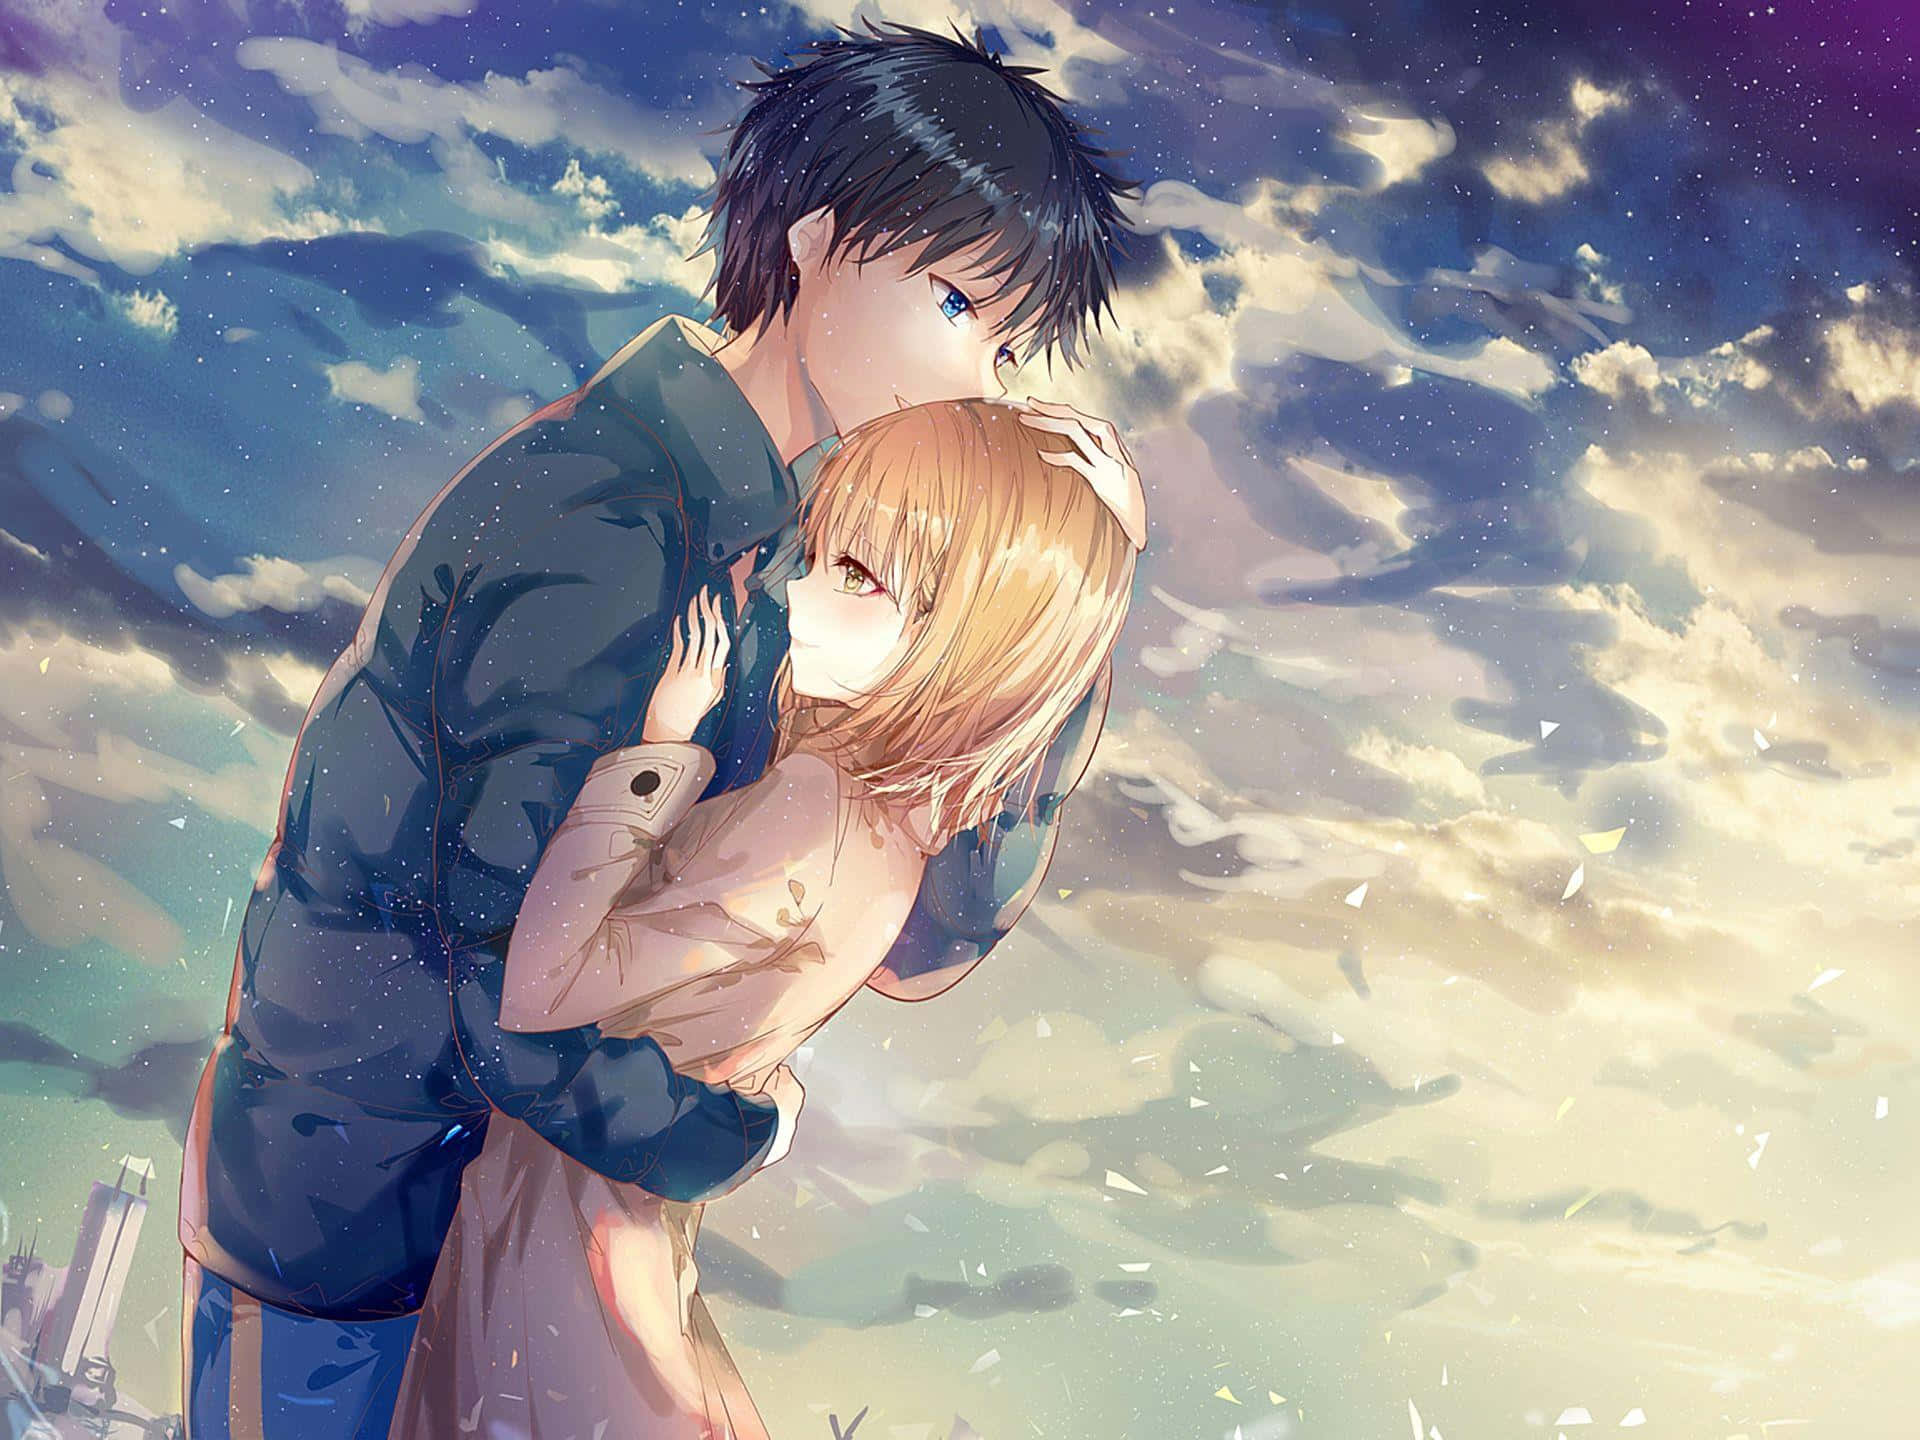 Enchanting Embrace of a Cute Anime Couple